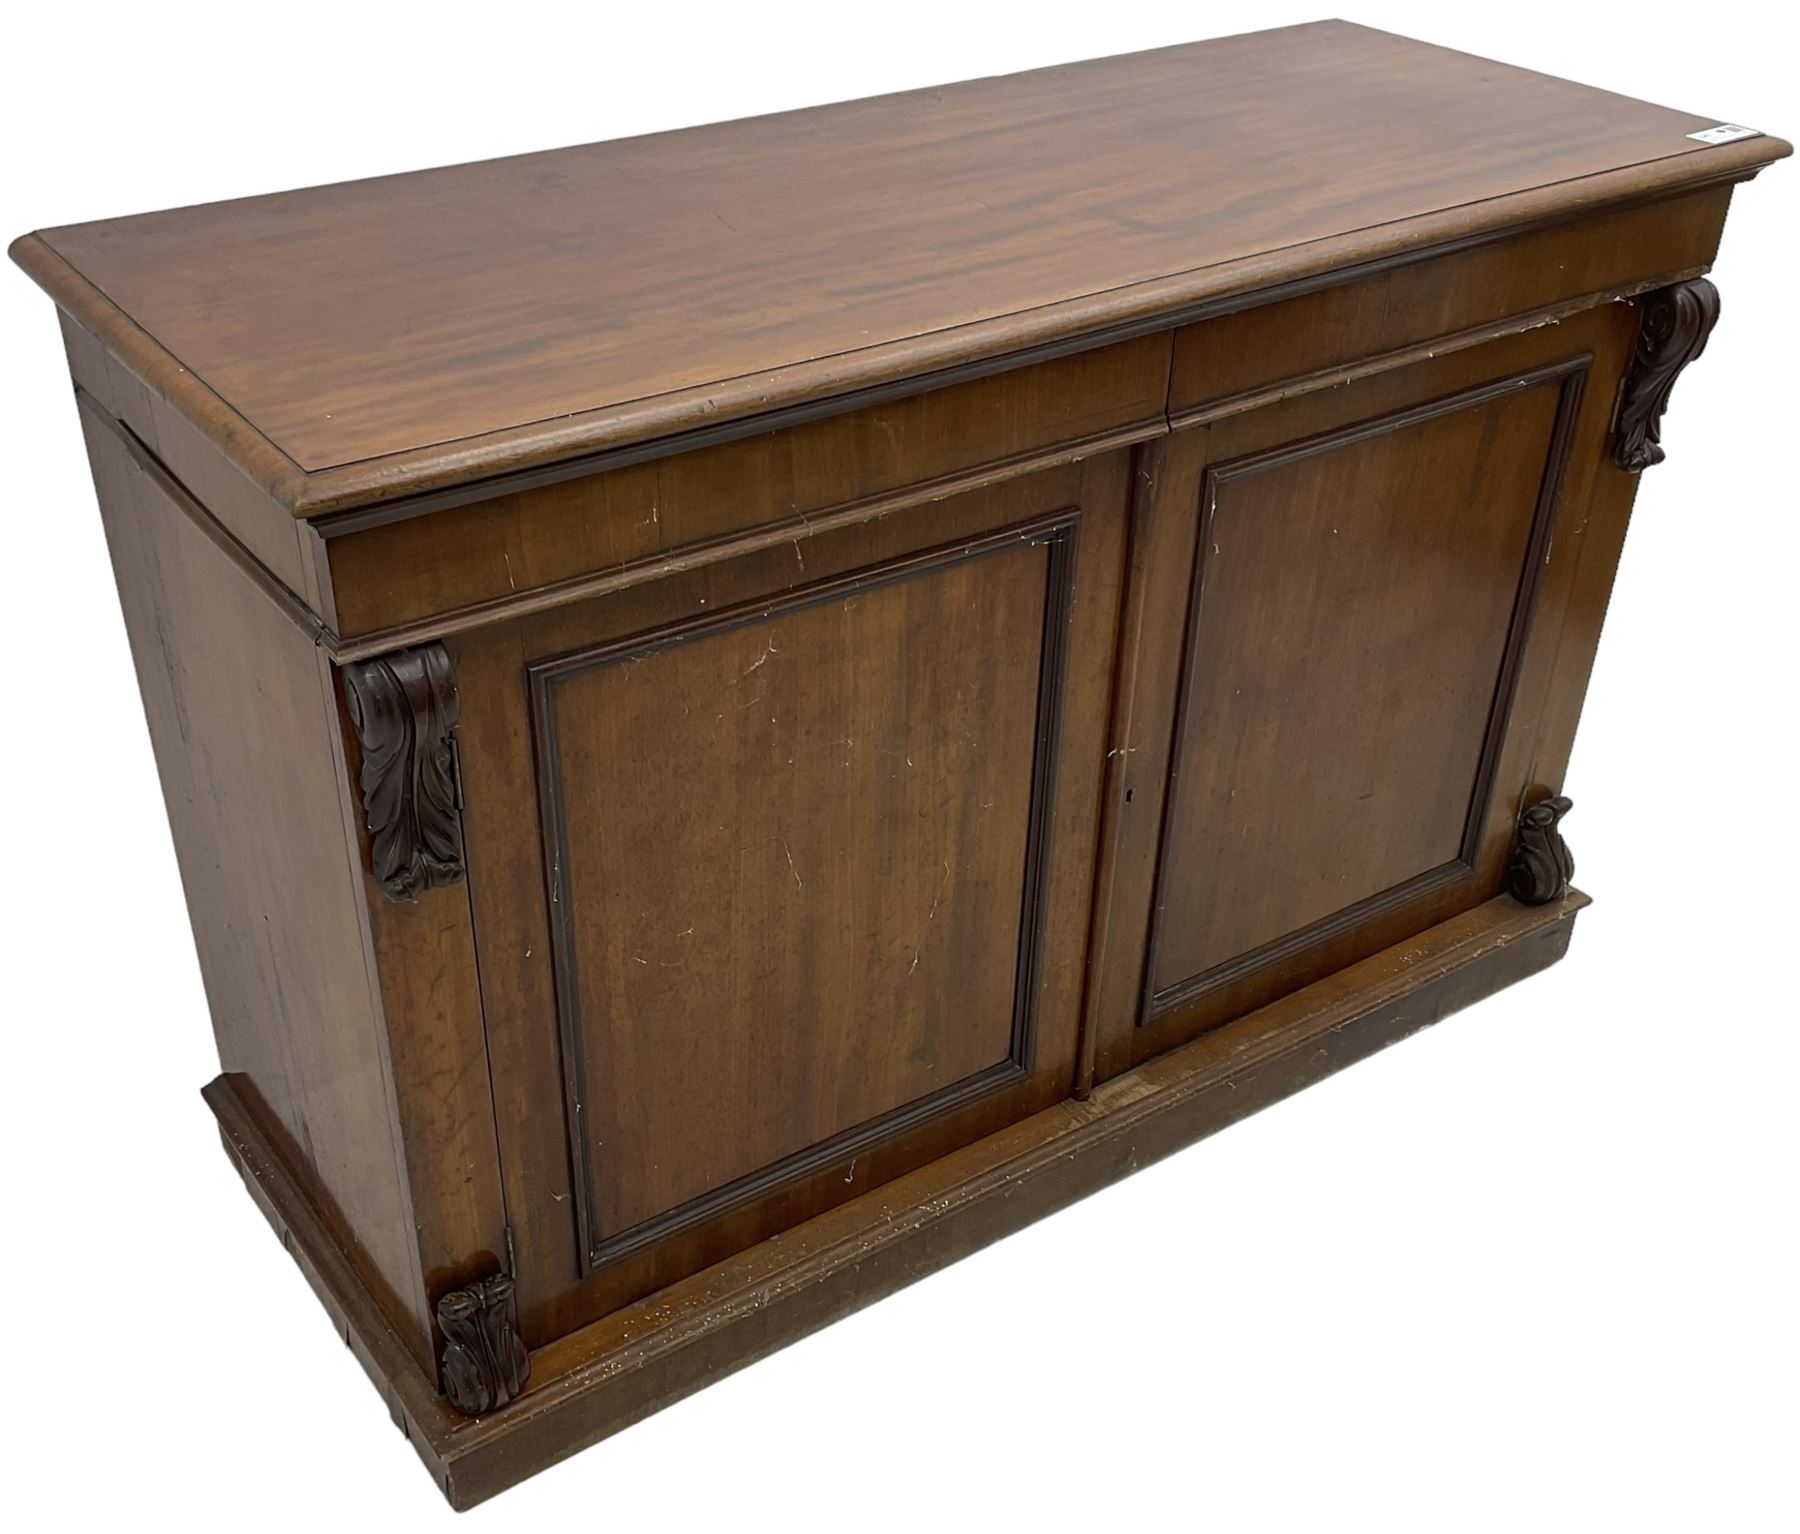 Early 19th century mahogany chiffonier sideboard - Image 5 of 9